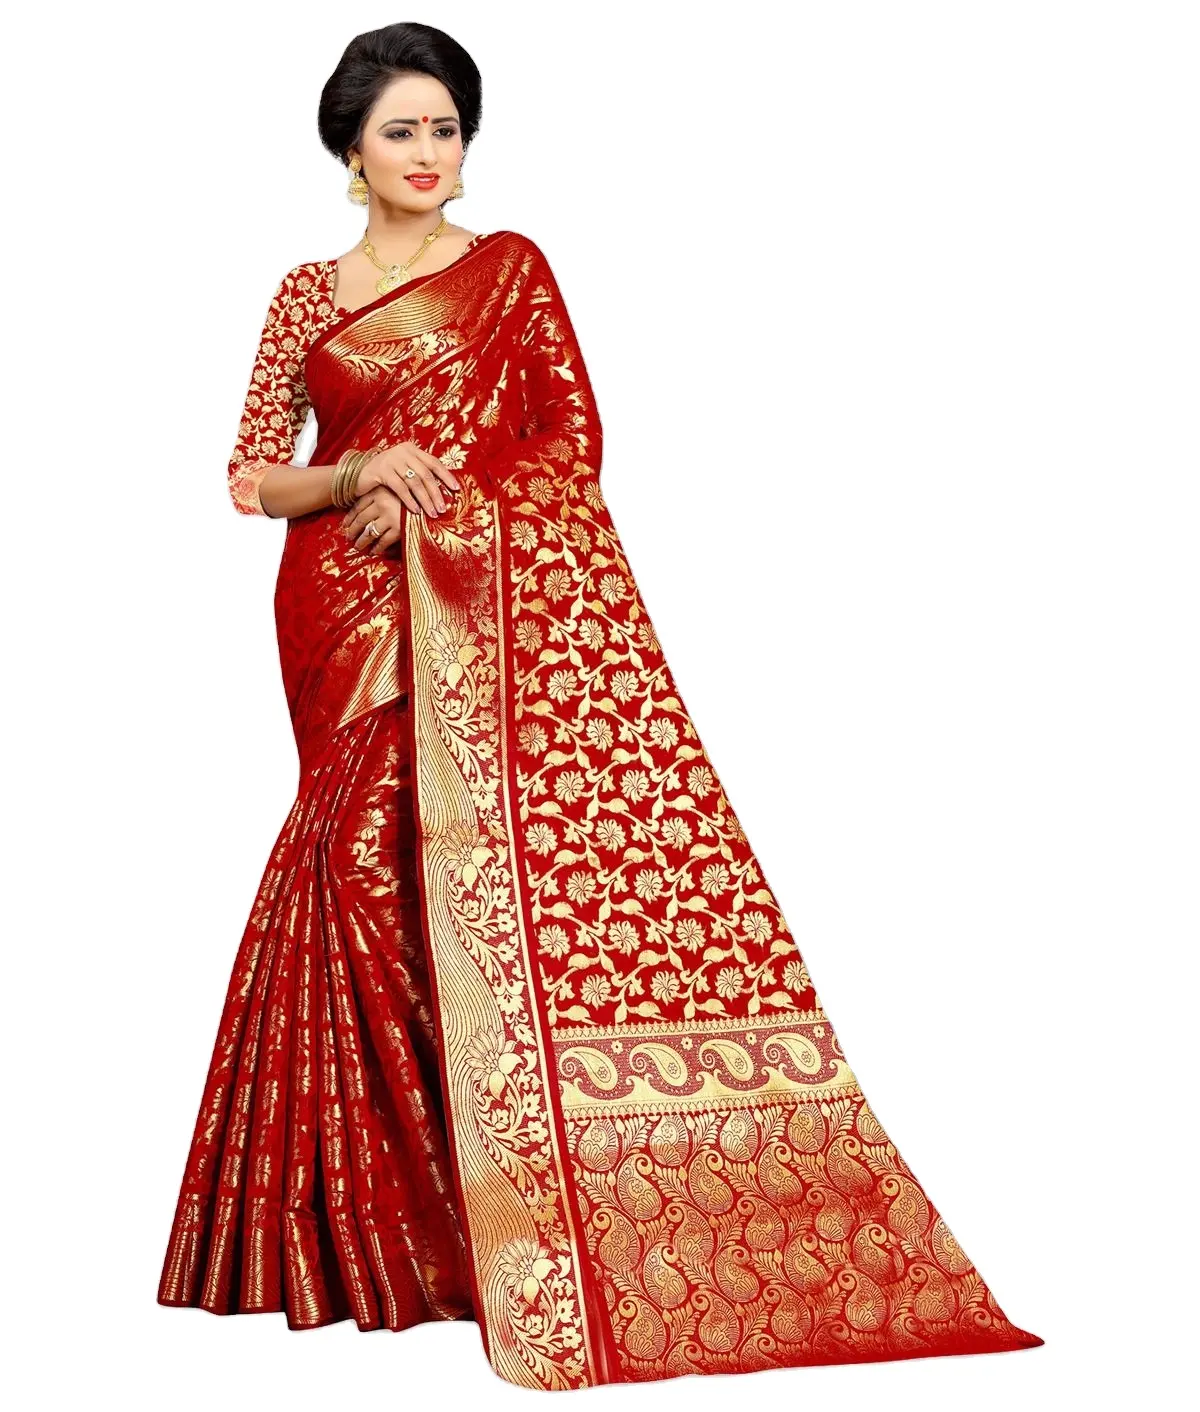 Banarasi Silk Premium Quality Indian Elegant Look Party Wear at Wholesale Price Sarees Wirh Beautiful Weaving